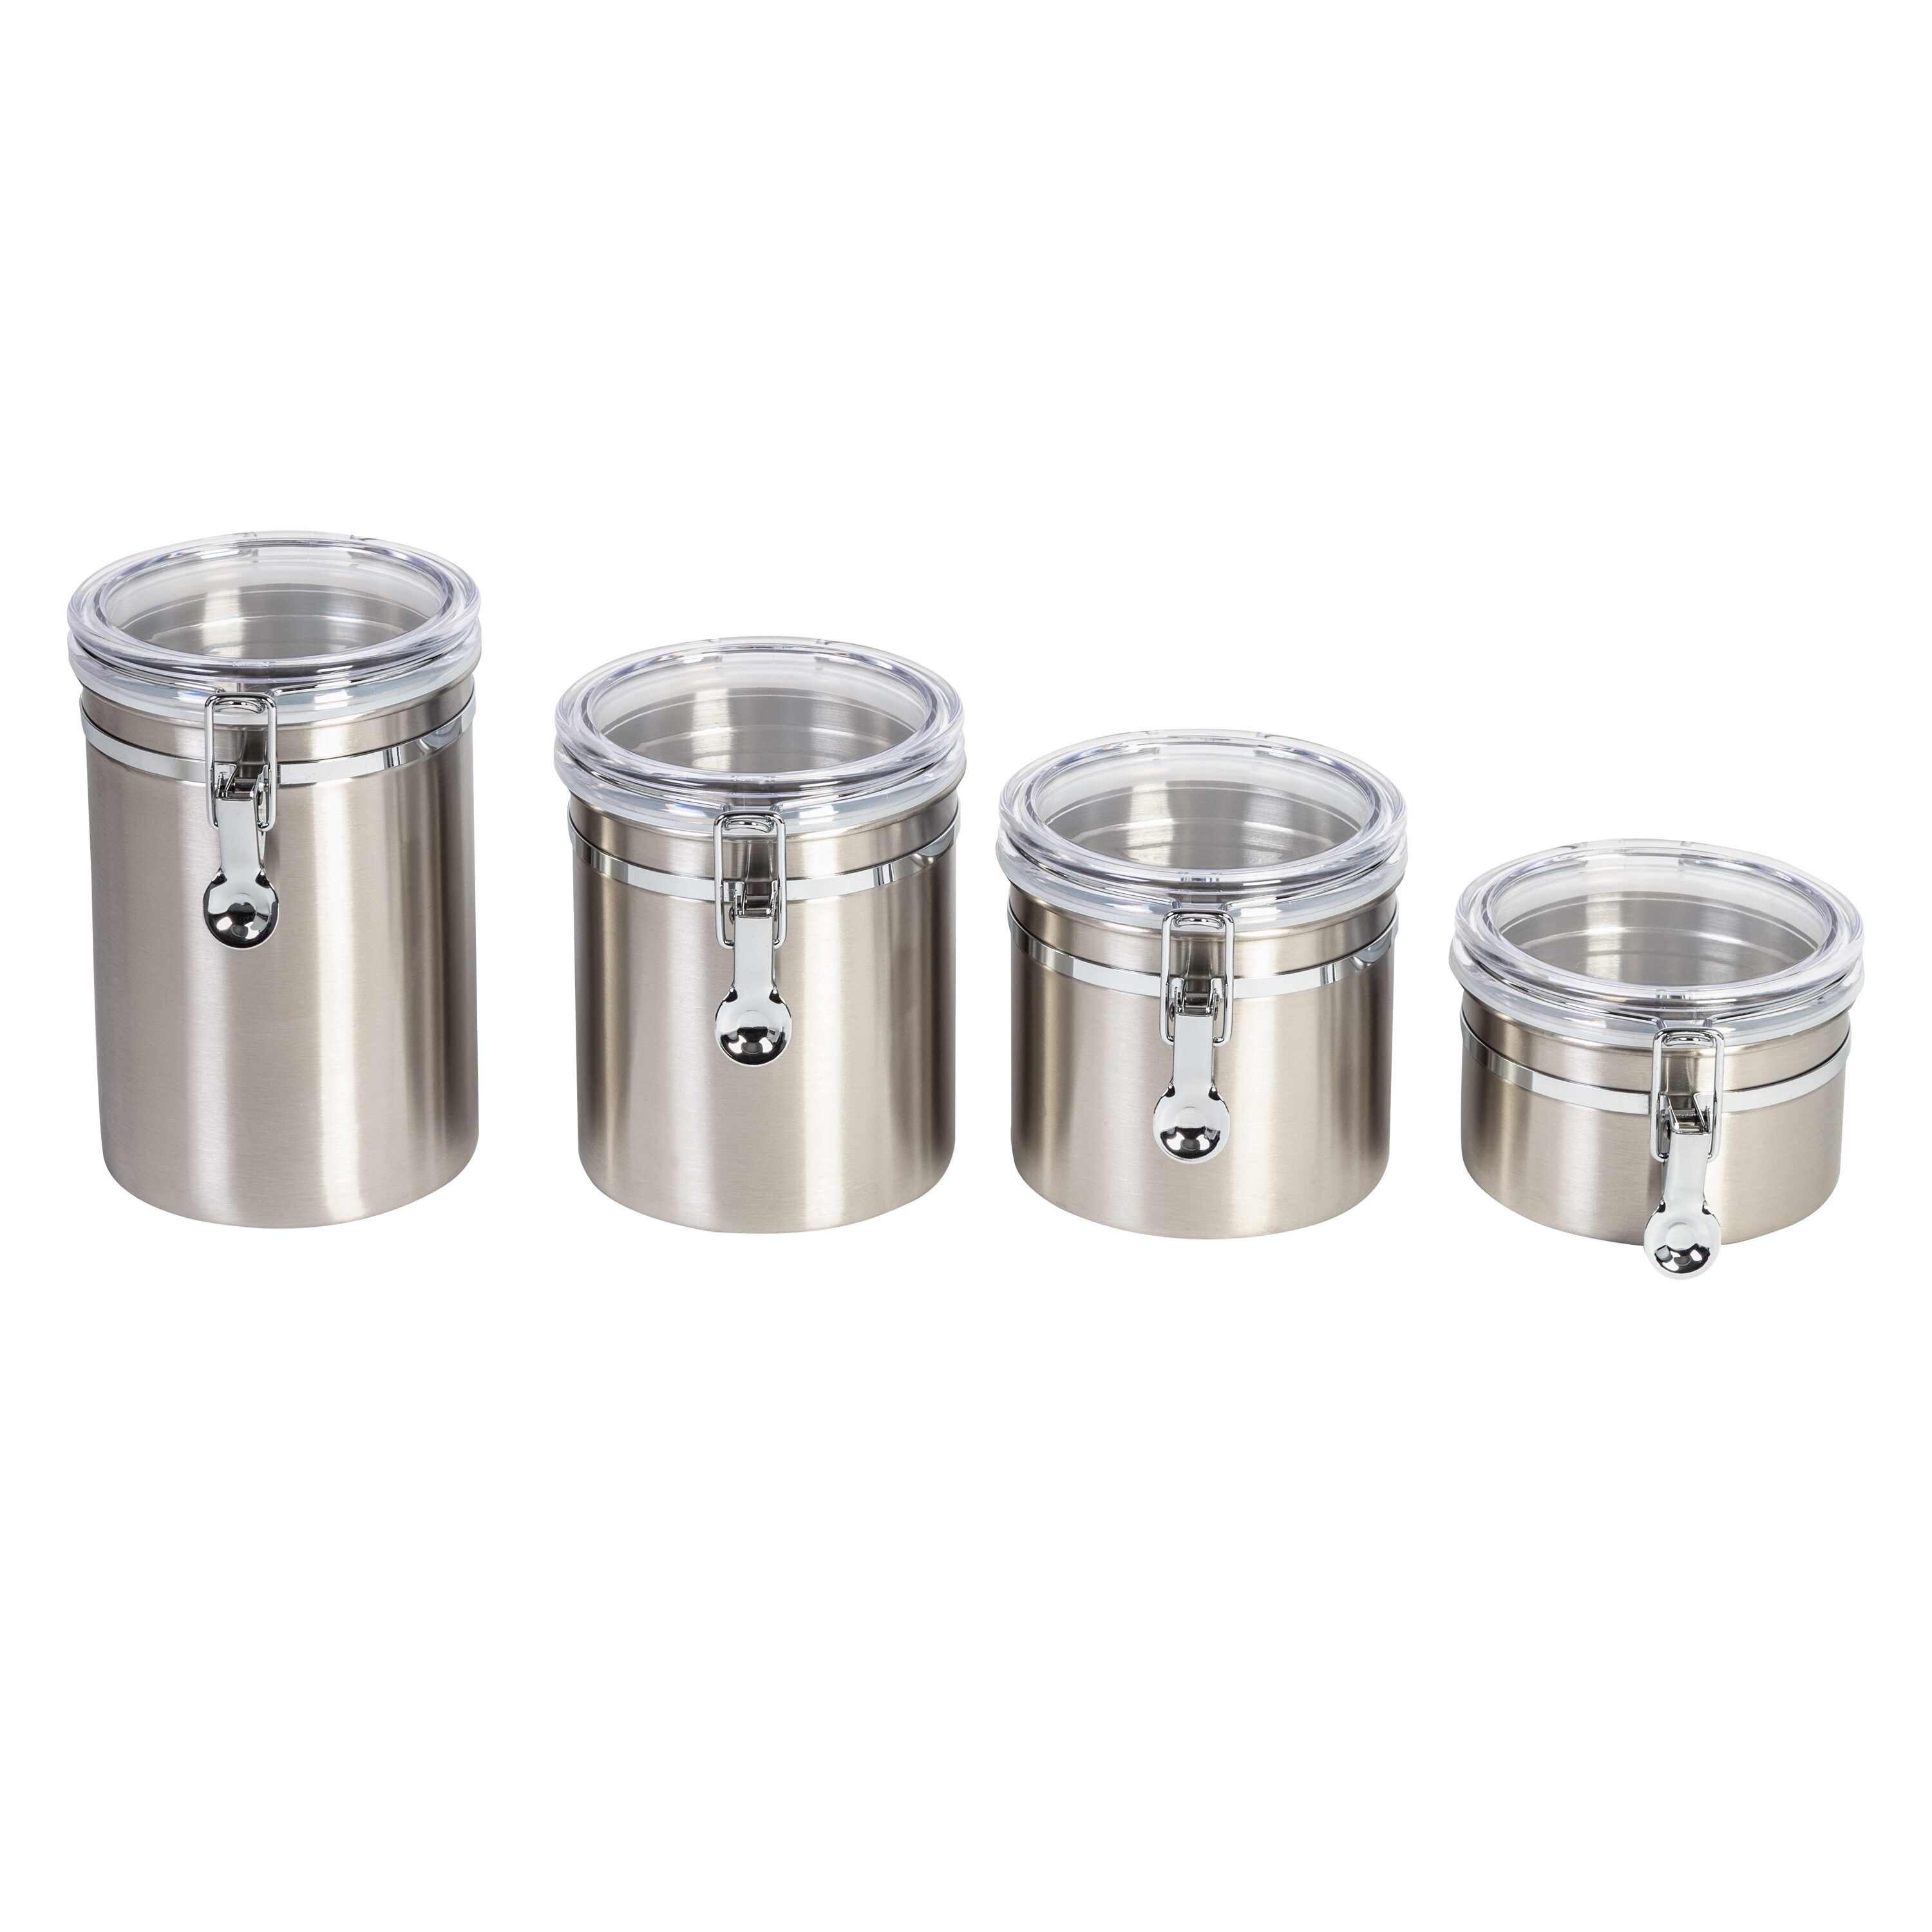 DALCINI 2-quart Stainless Steel Bpa-free Reusable Food Storage